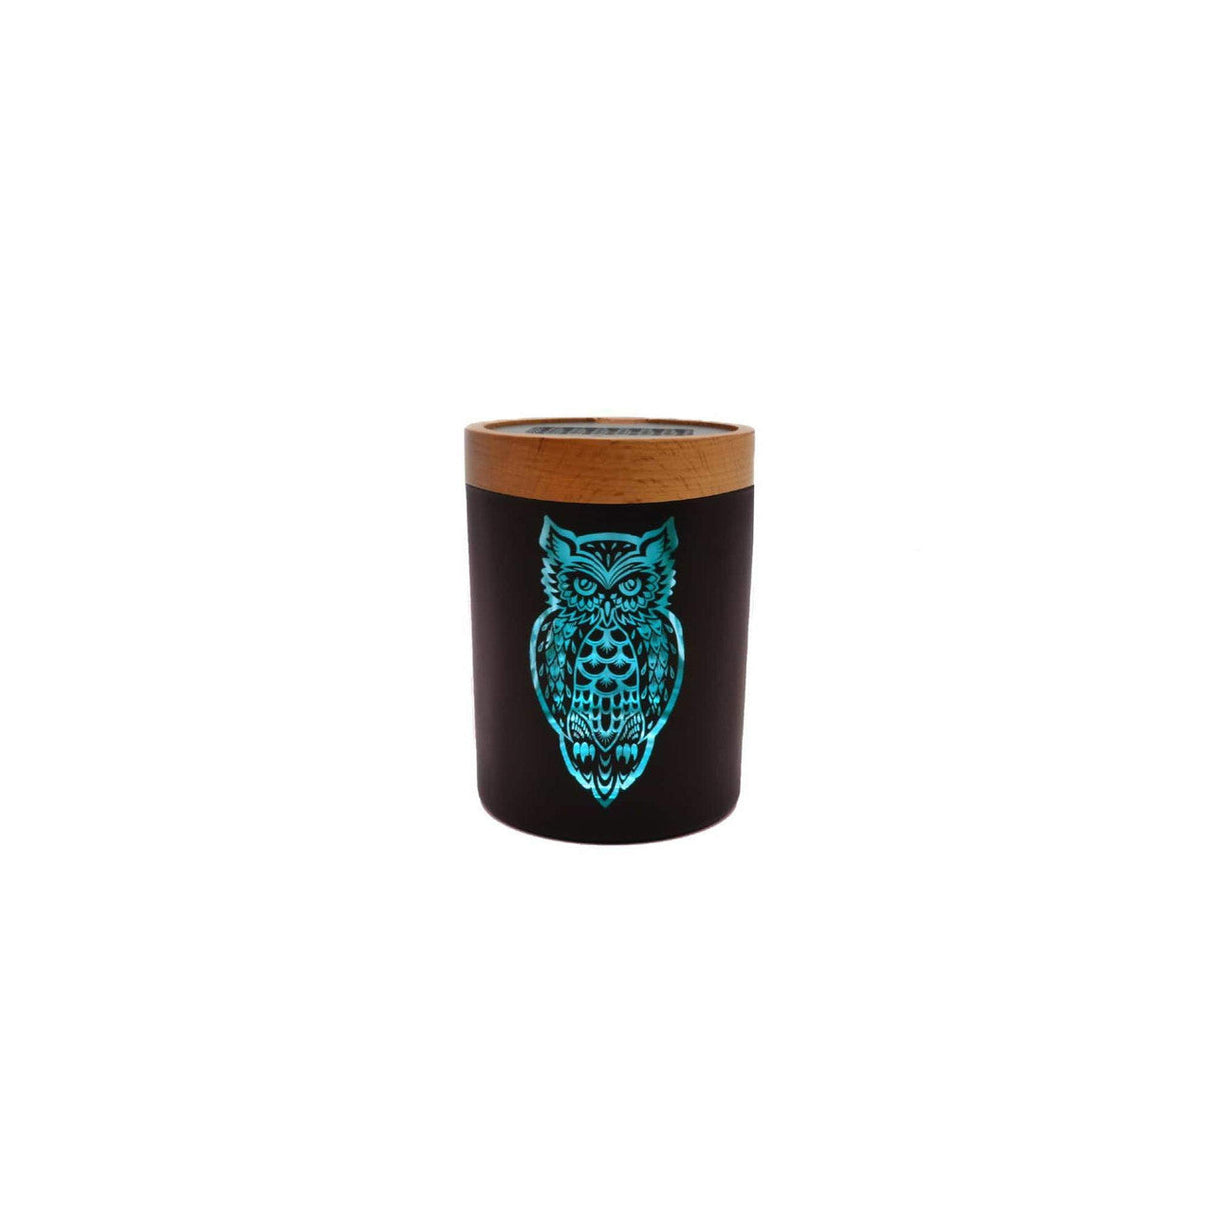 V Syndicate Smart Stash Jar Medium Owllusion Turquoise - Front View on White Background